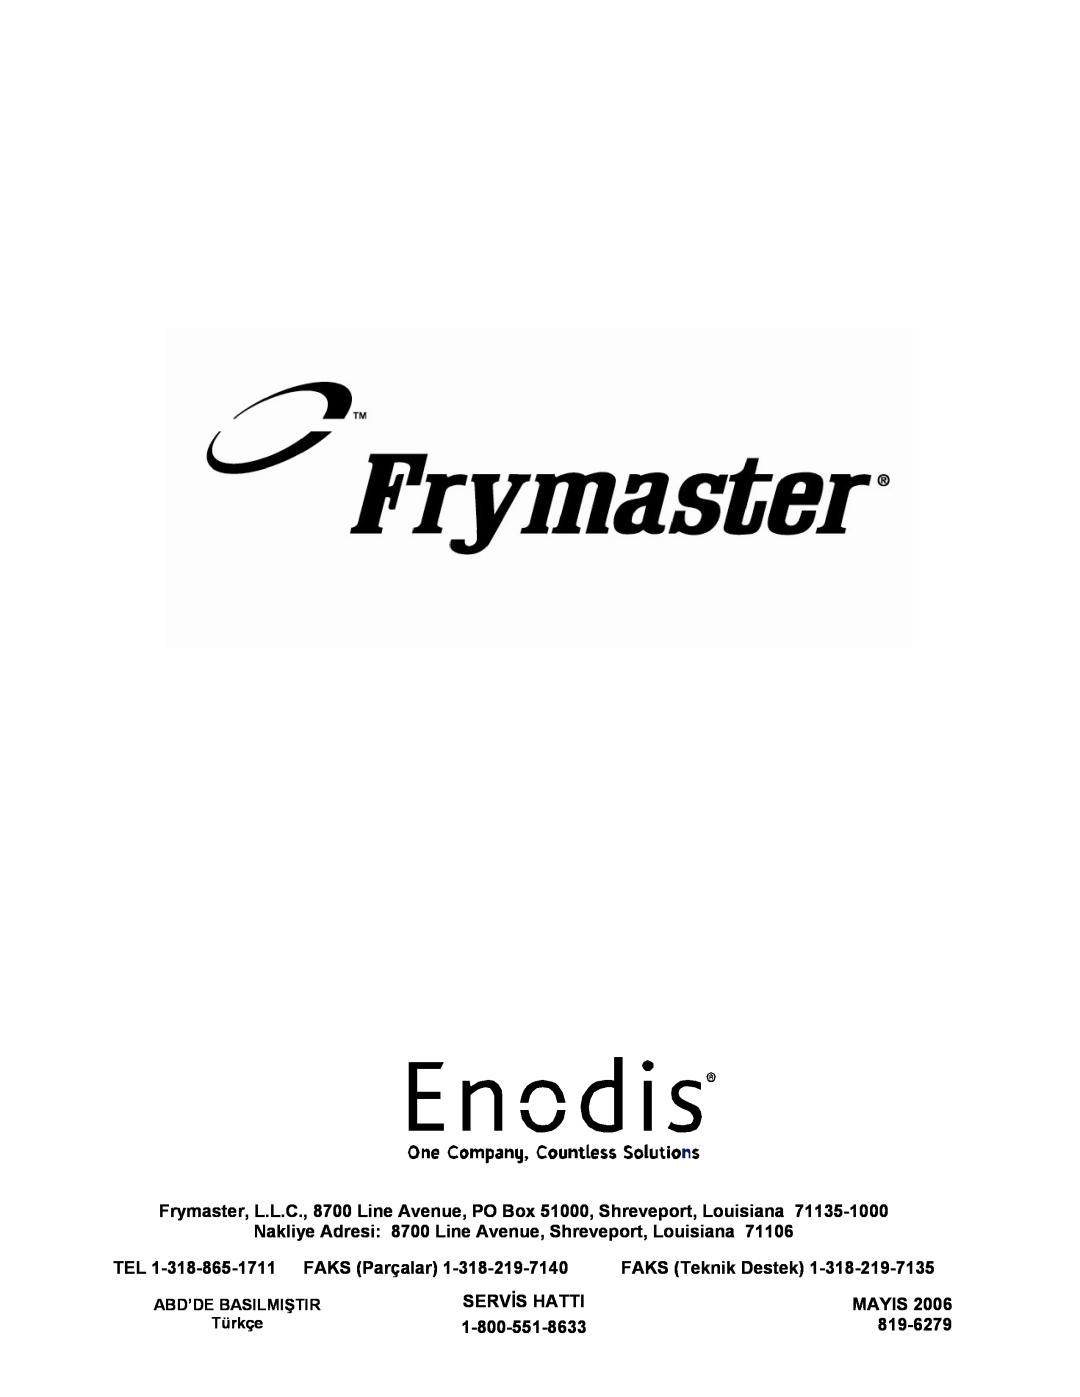 Frymaster UHC-P 4-yuva manual TEL 1-318-865-1711FAKS Parçalar, FAKS Teknik Destek, Servis Hatti, Mayis, 819-6279, Türkçe 